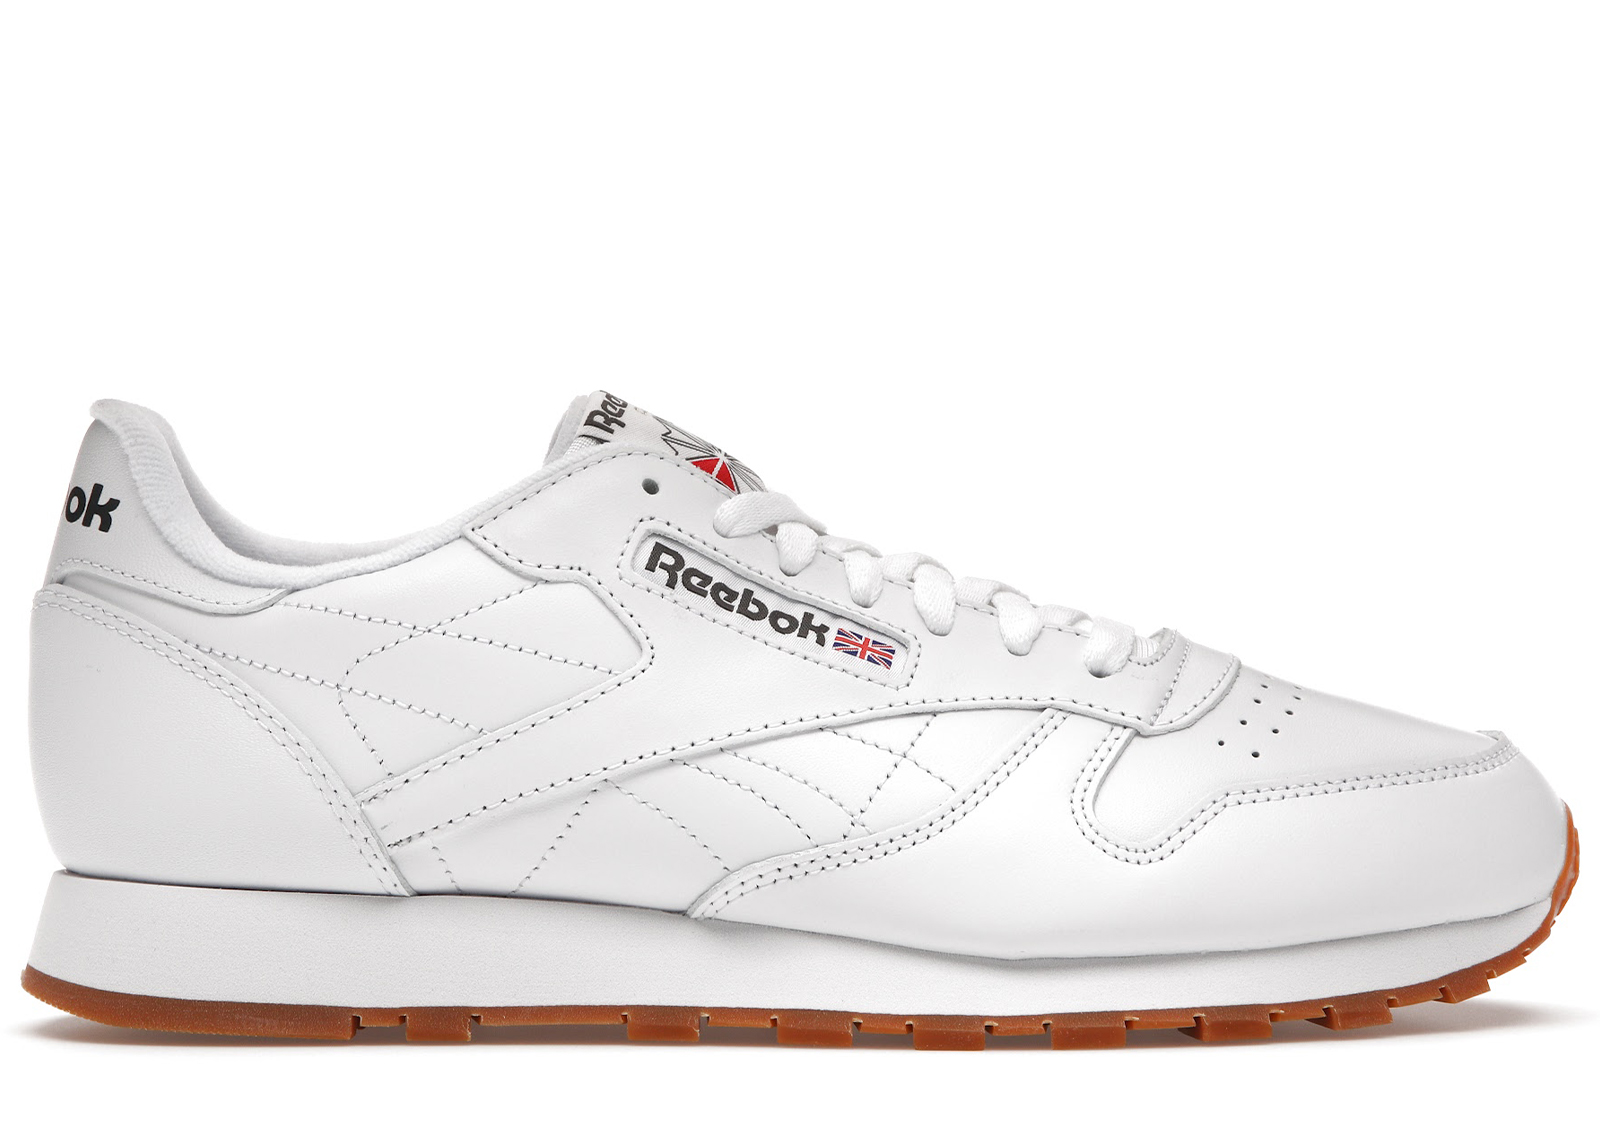 Gum Mens Running Tennis Shoes Item 49797 Reebok Classic Leather White 